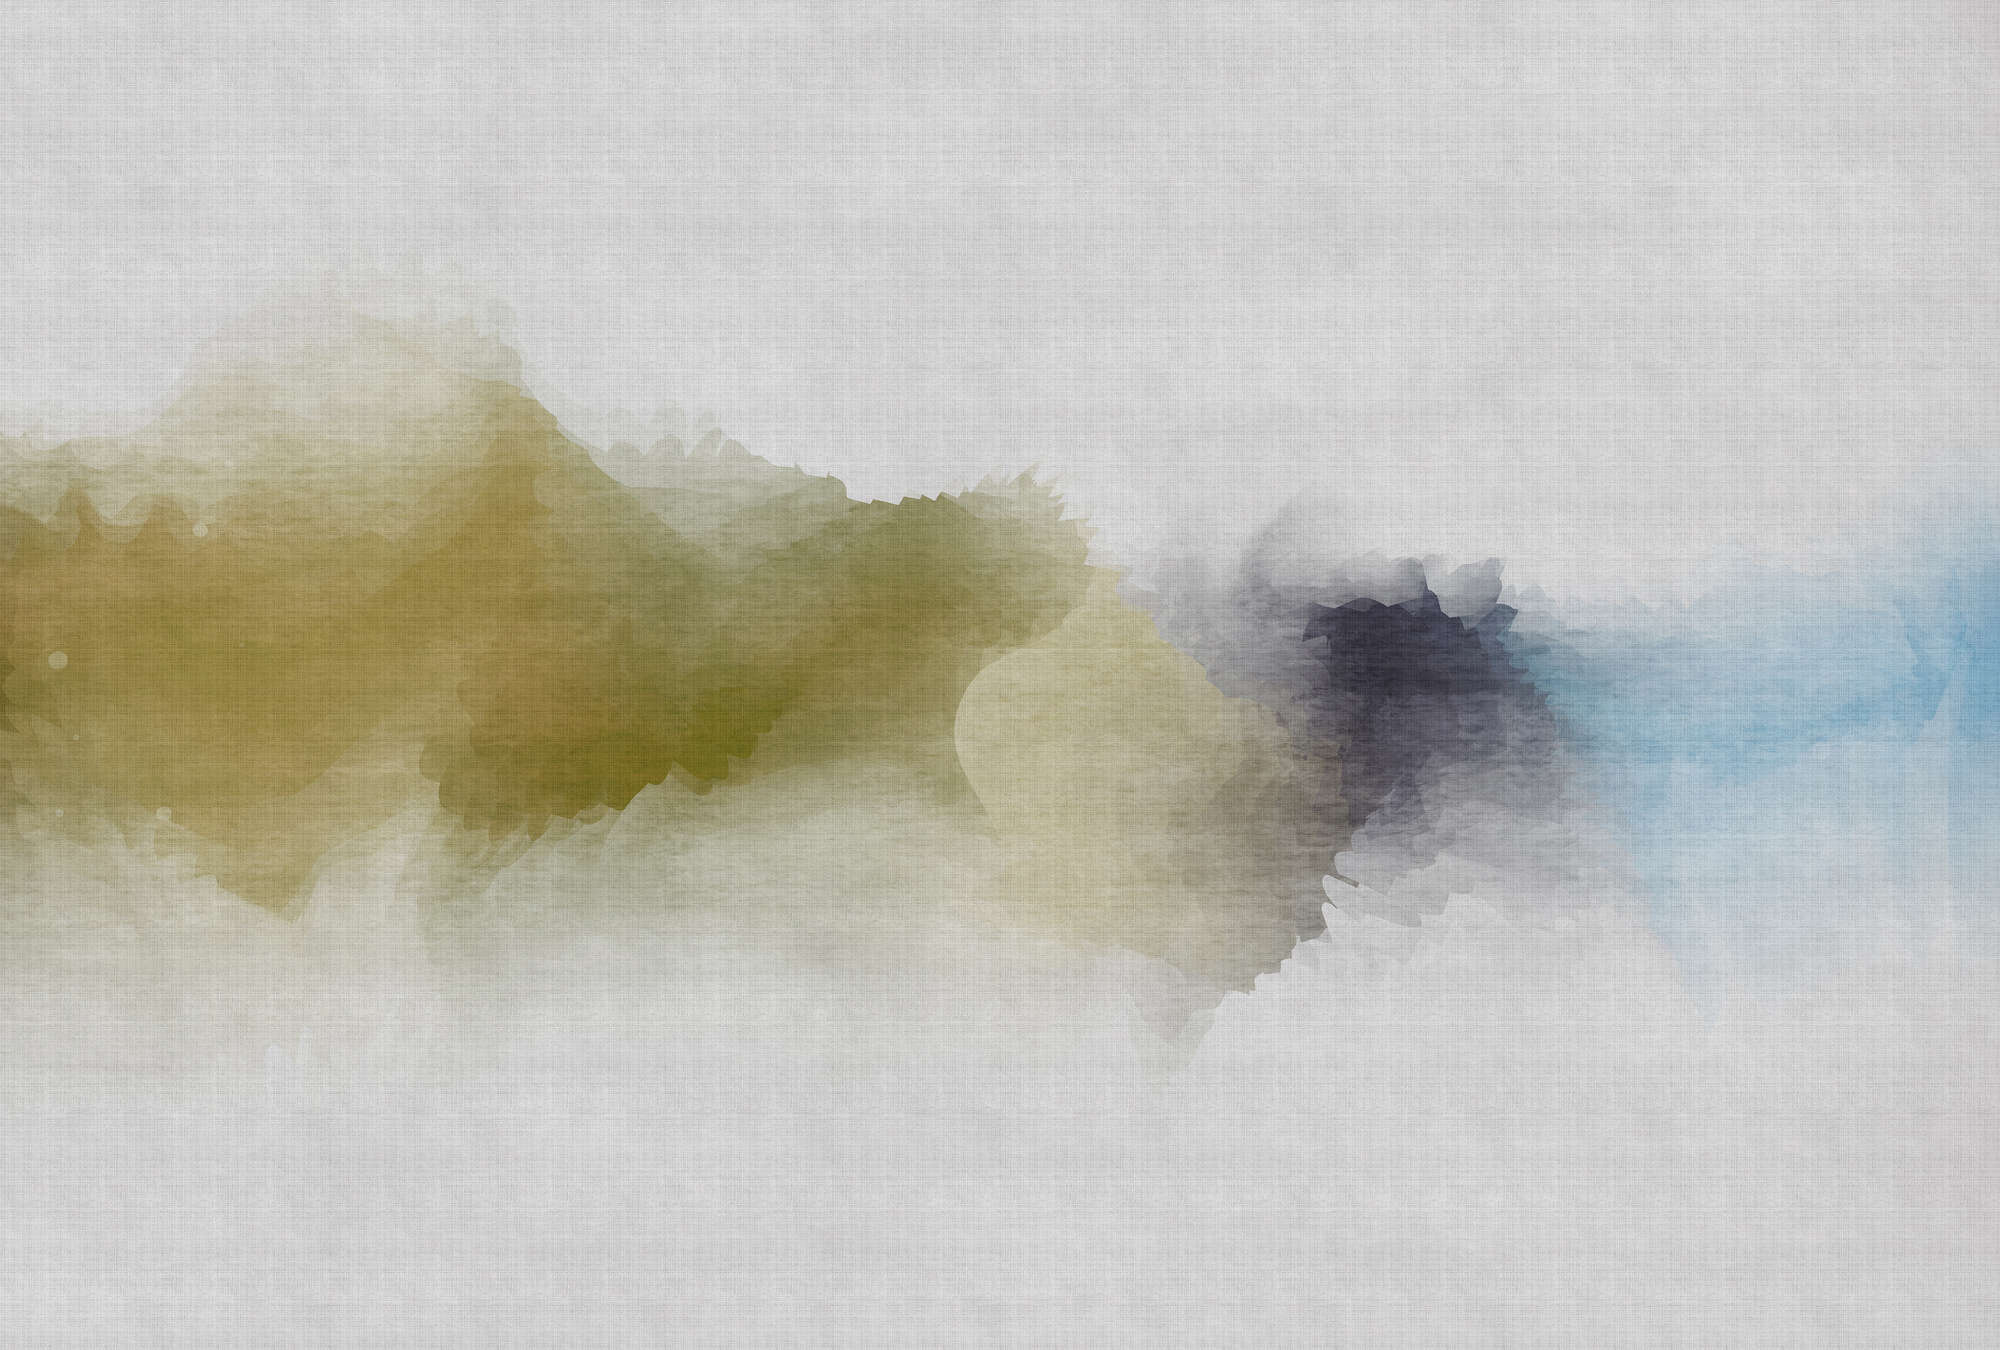             Daydream 3 - Photo wallpaper cloudy watercolour pattern- natural linen structure - Blue, Yellow | Premium smooth fleece
        